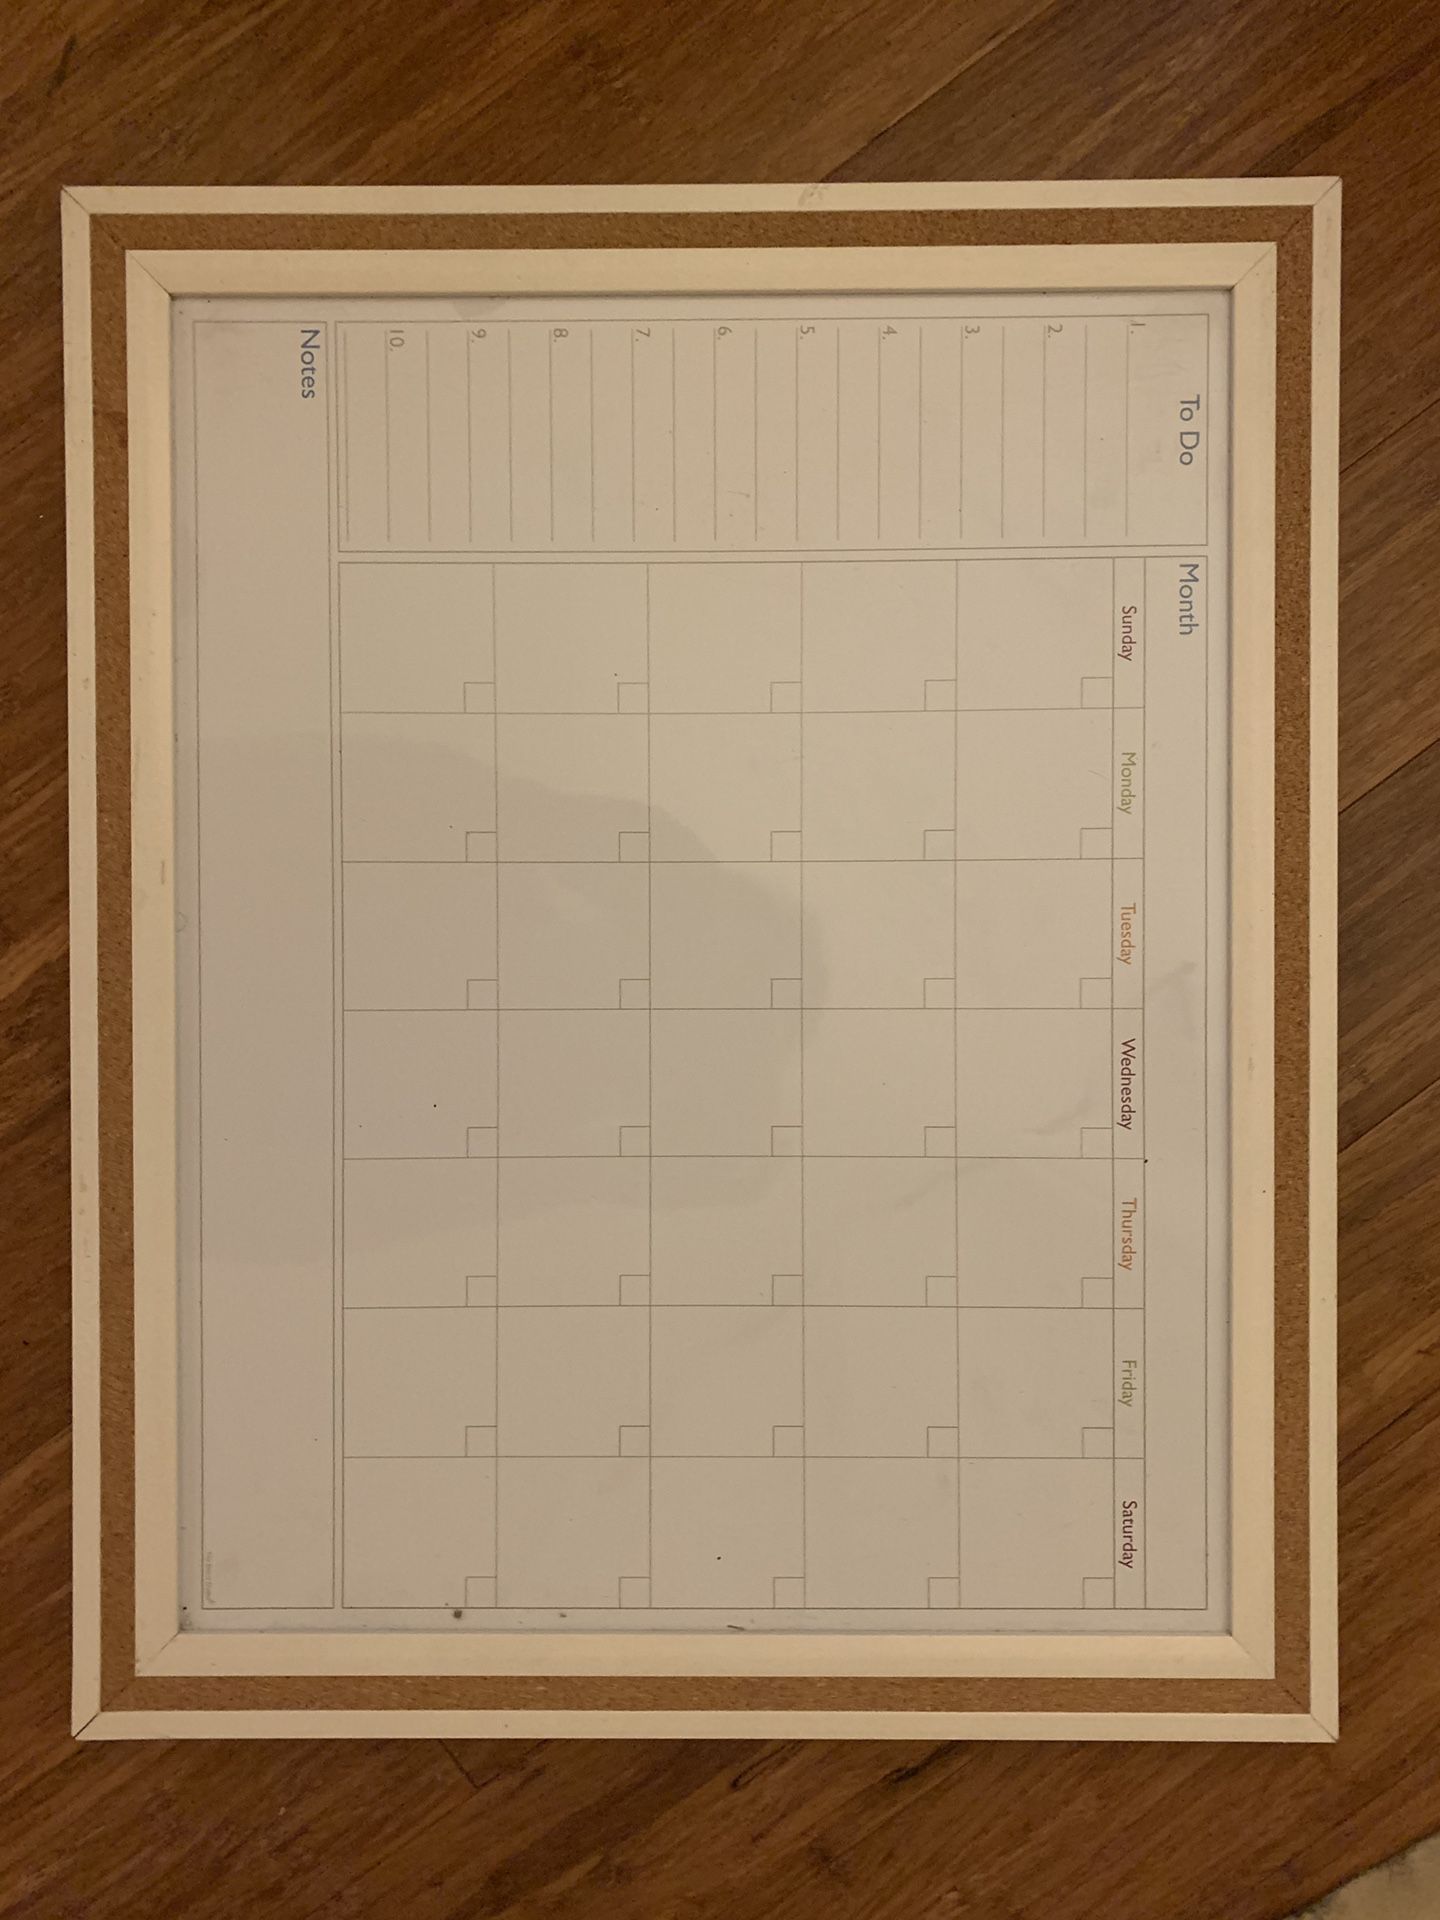 Whiteboard calendar